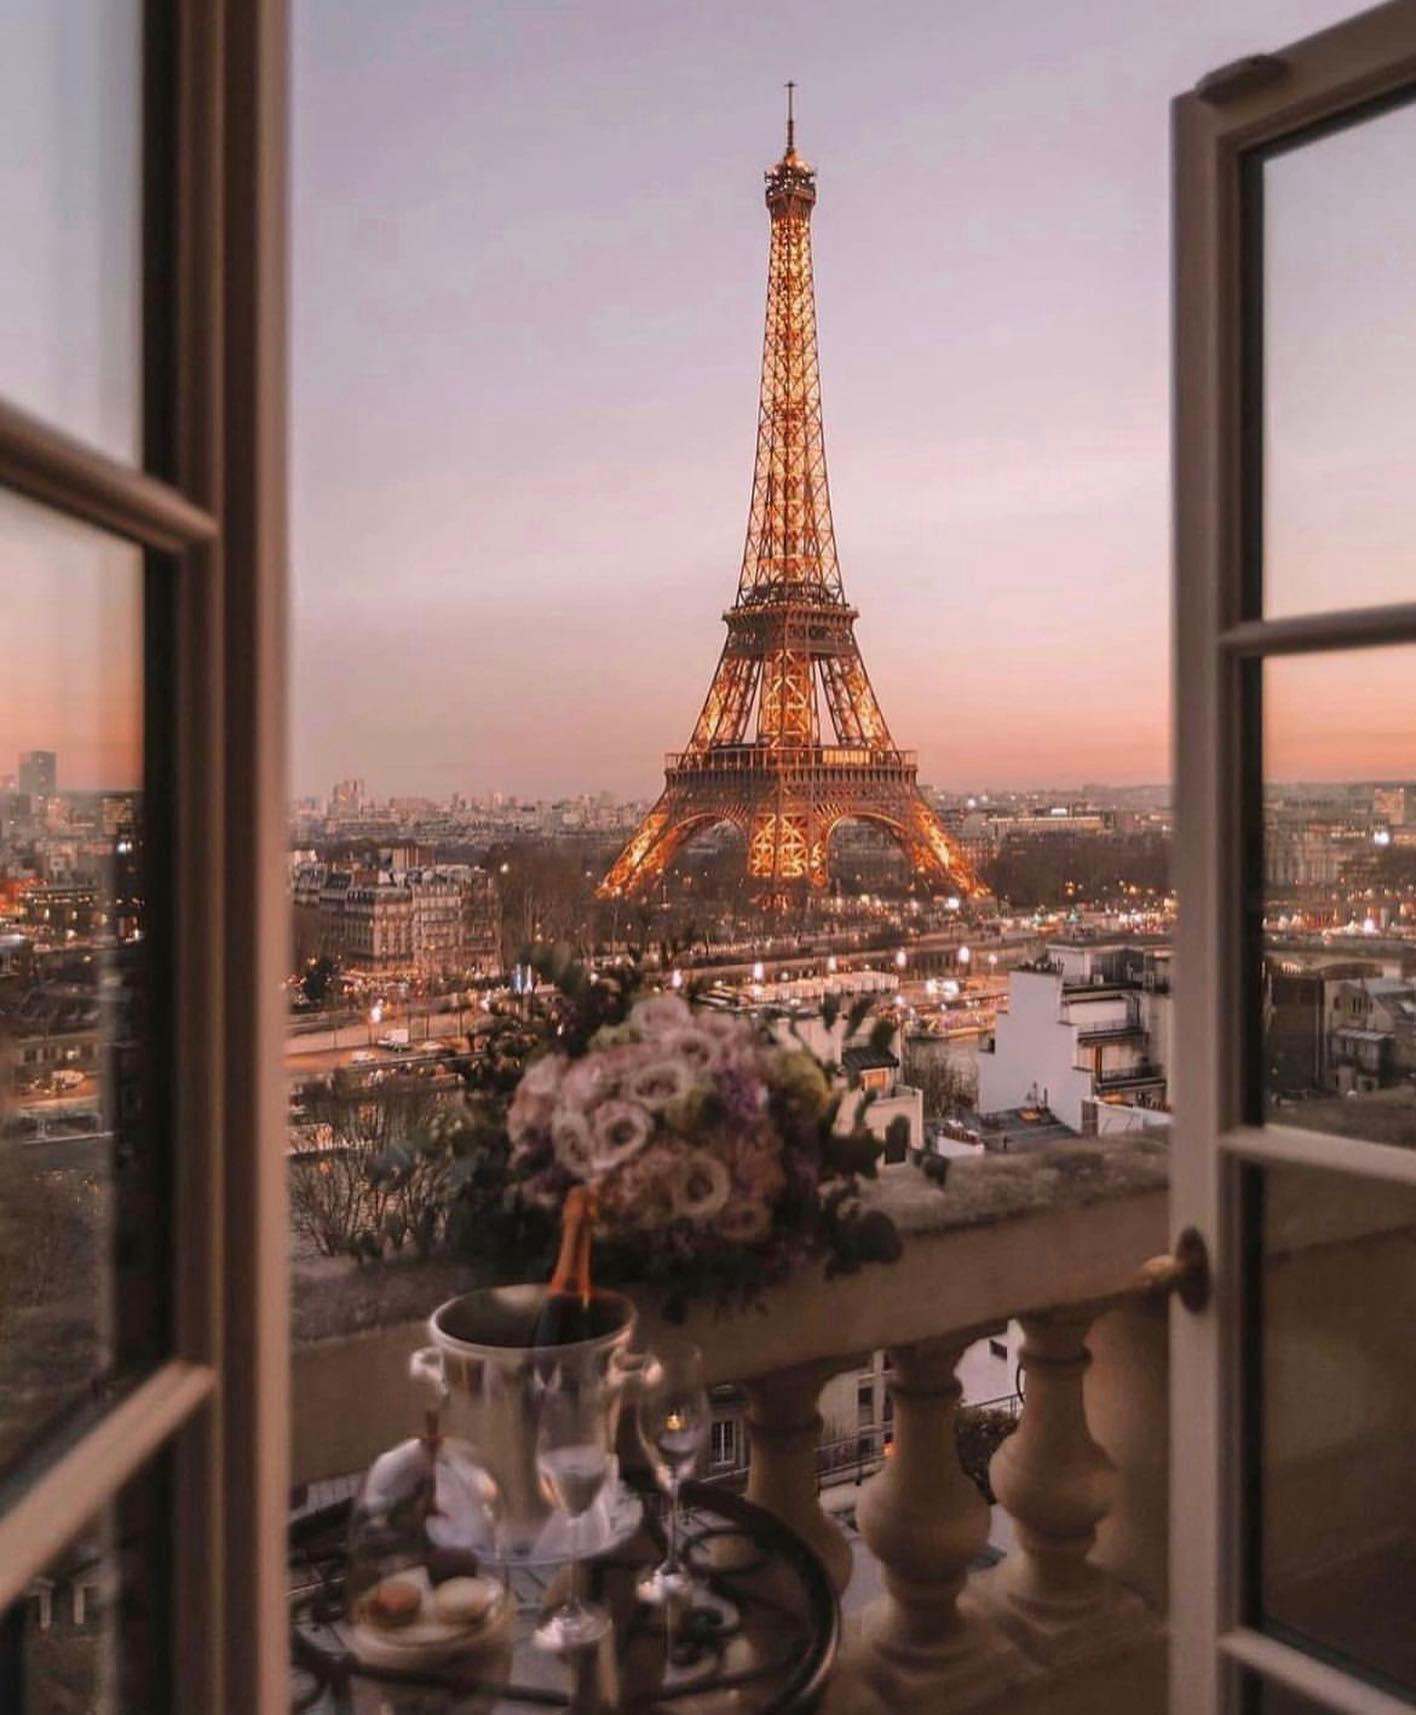 Parisian views